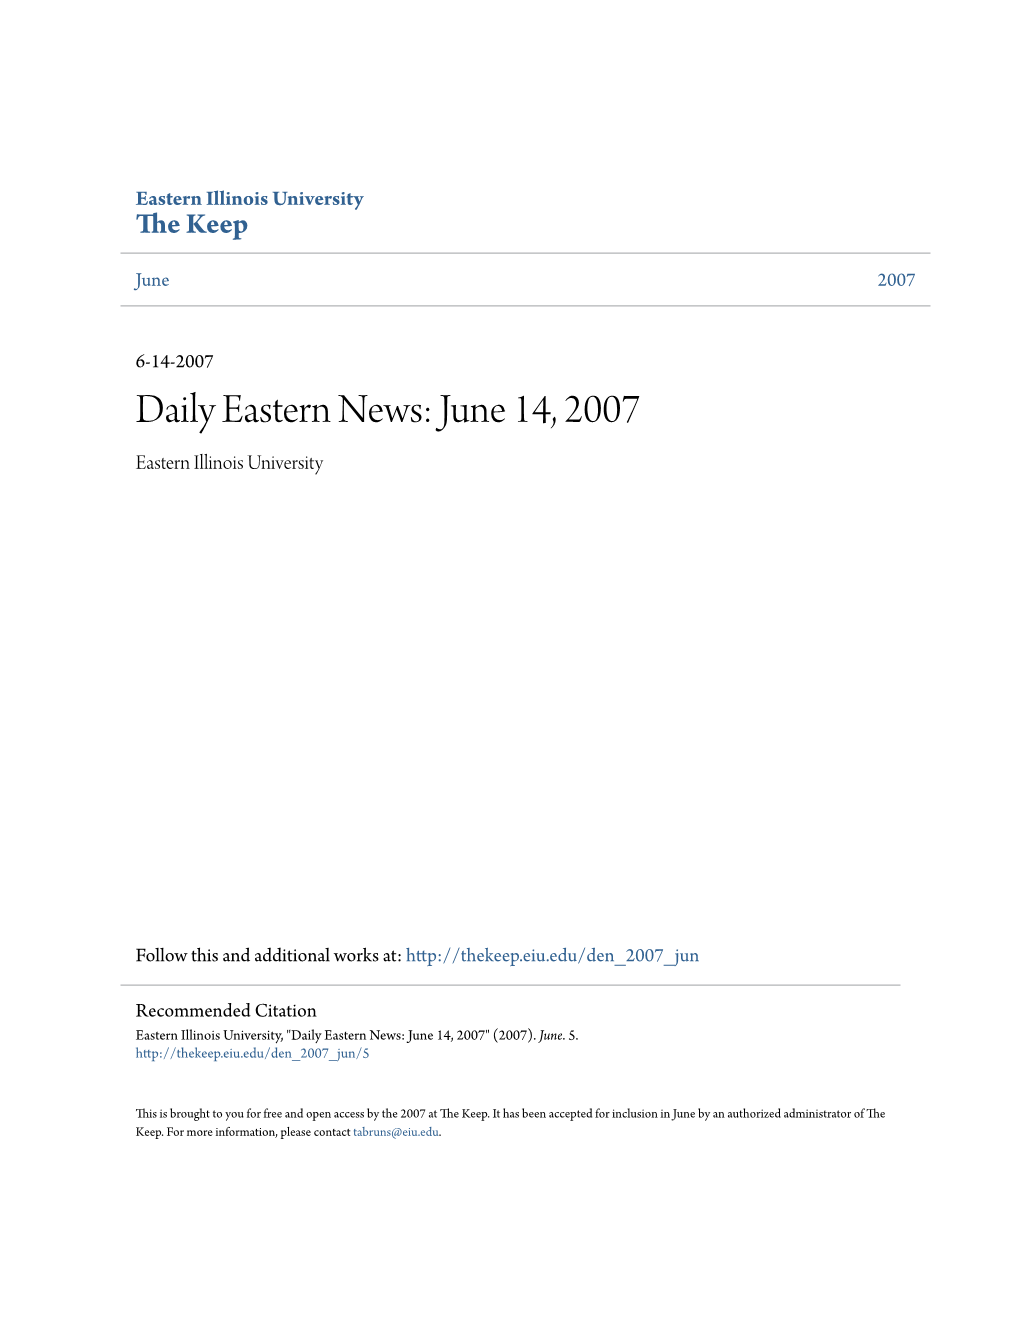 Daily Eastern News: June 14, 2007 Eastern Illinois University